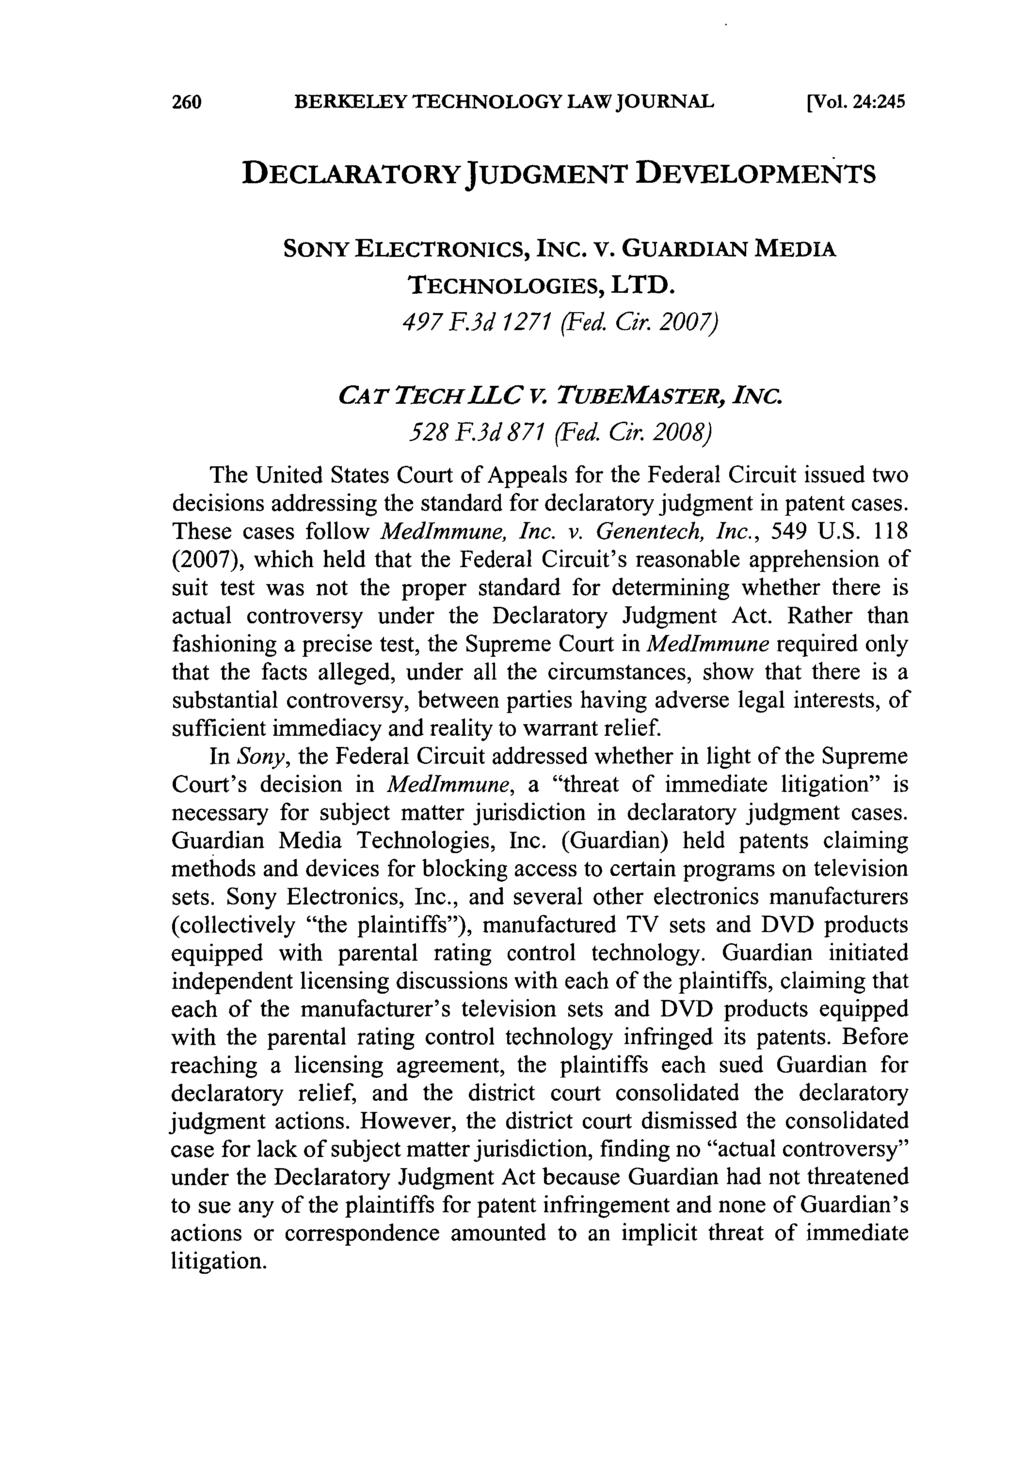 BERKELEY TECHNOLOGY LAW JOURNAL [Vol. 24:245 DECLARATORY JUDGMENT DEVELOPMENTS SONY ELECTRONICS, INC. V. GUARDIAN MEDIA TECHNOLOGIES, LTD. 497 F.3d 1271 (Fed. Cir. 2007) CAT TECH LL C V.